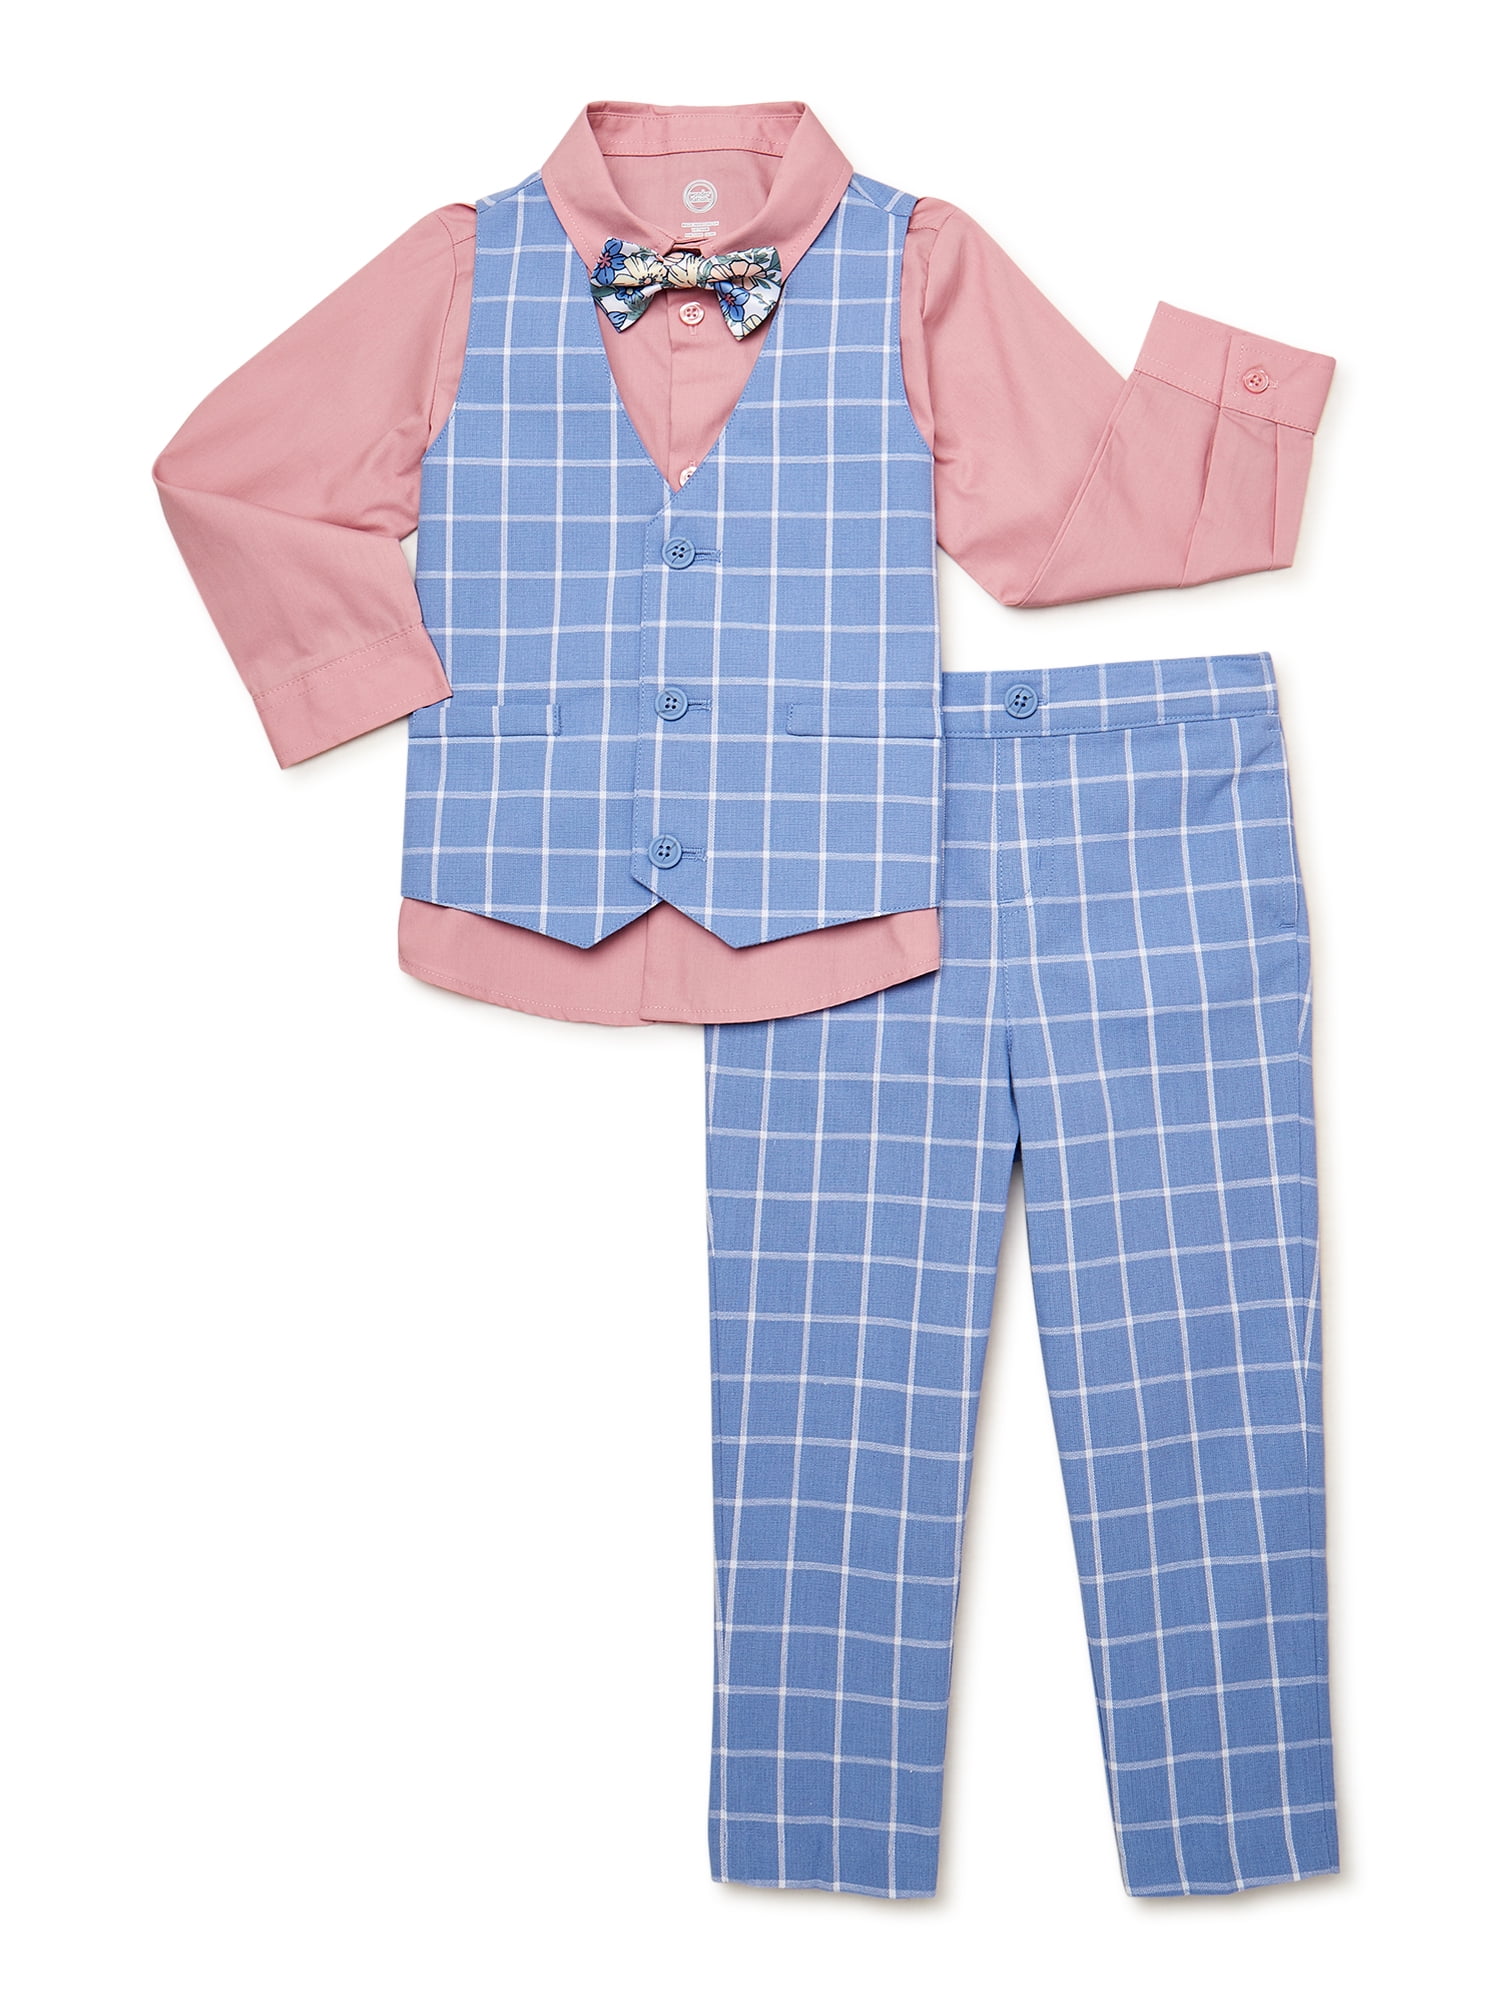 Wonder Nation Toddler Boys Dressy Outfit Set, 4-Piece, Sizes 12M-5T